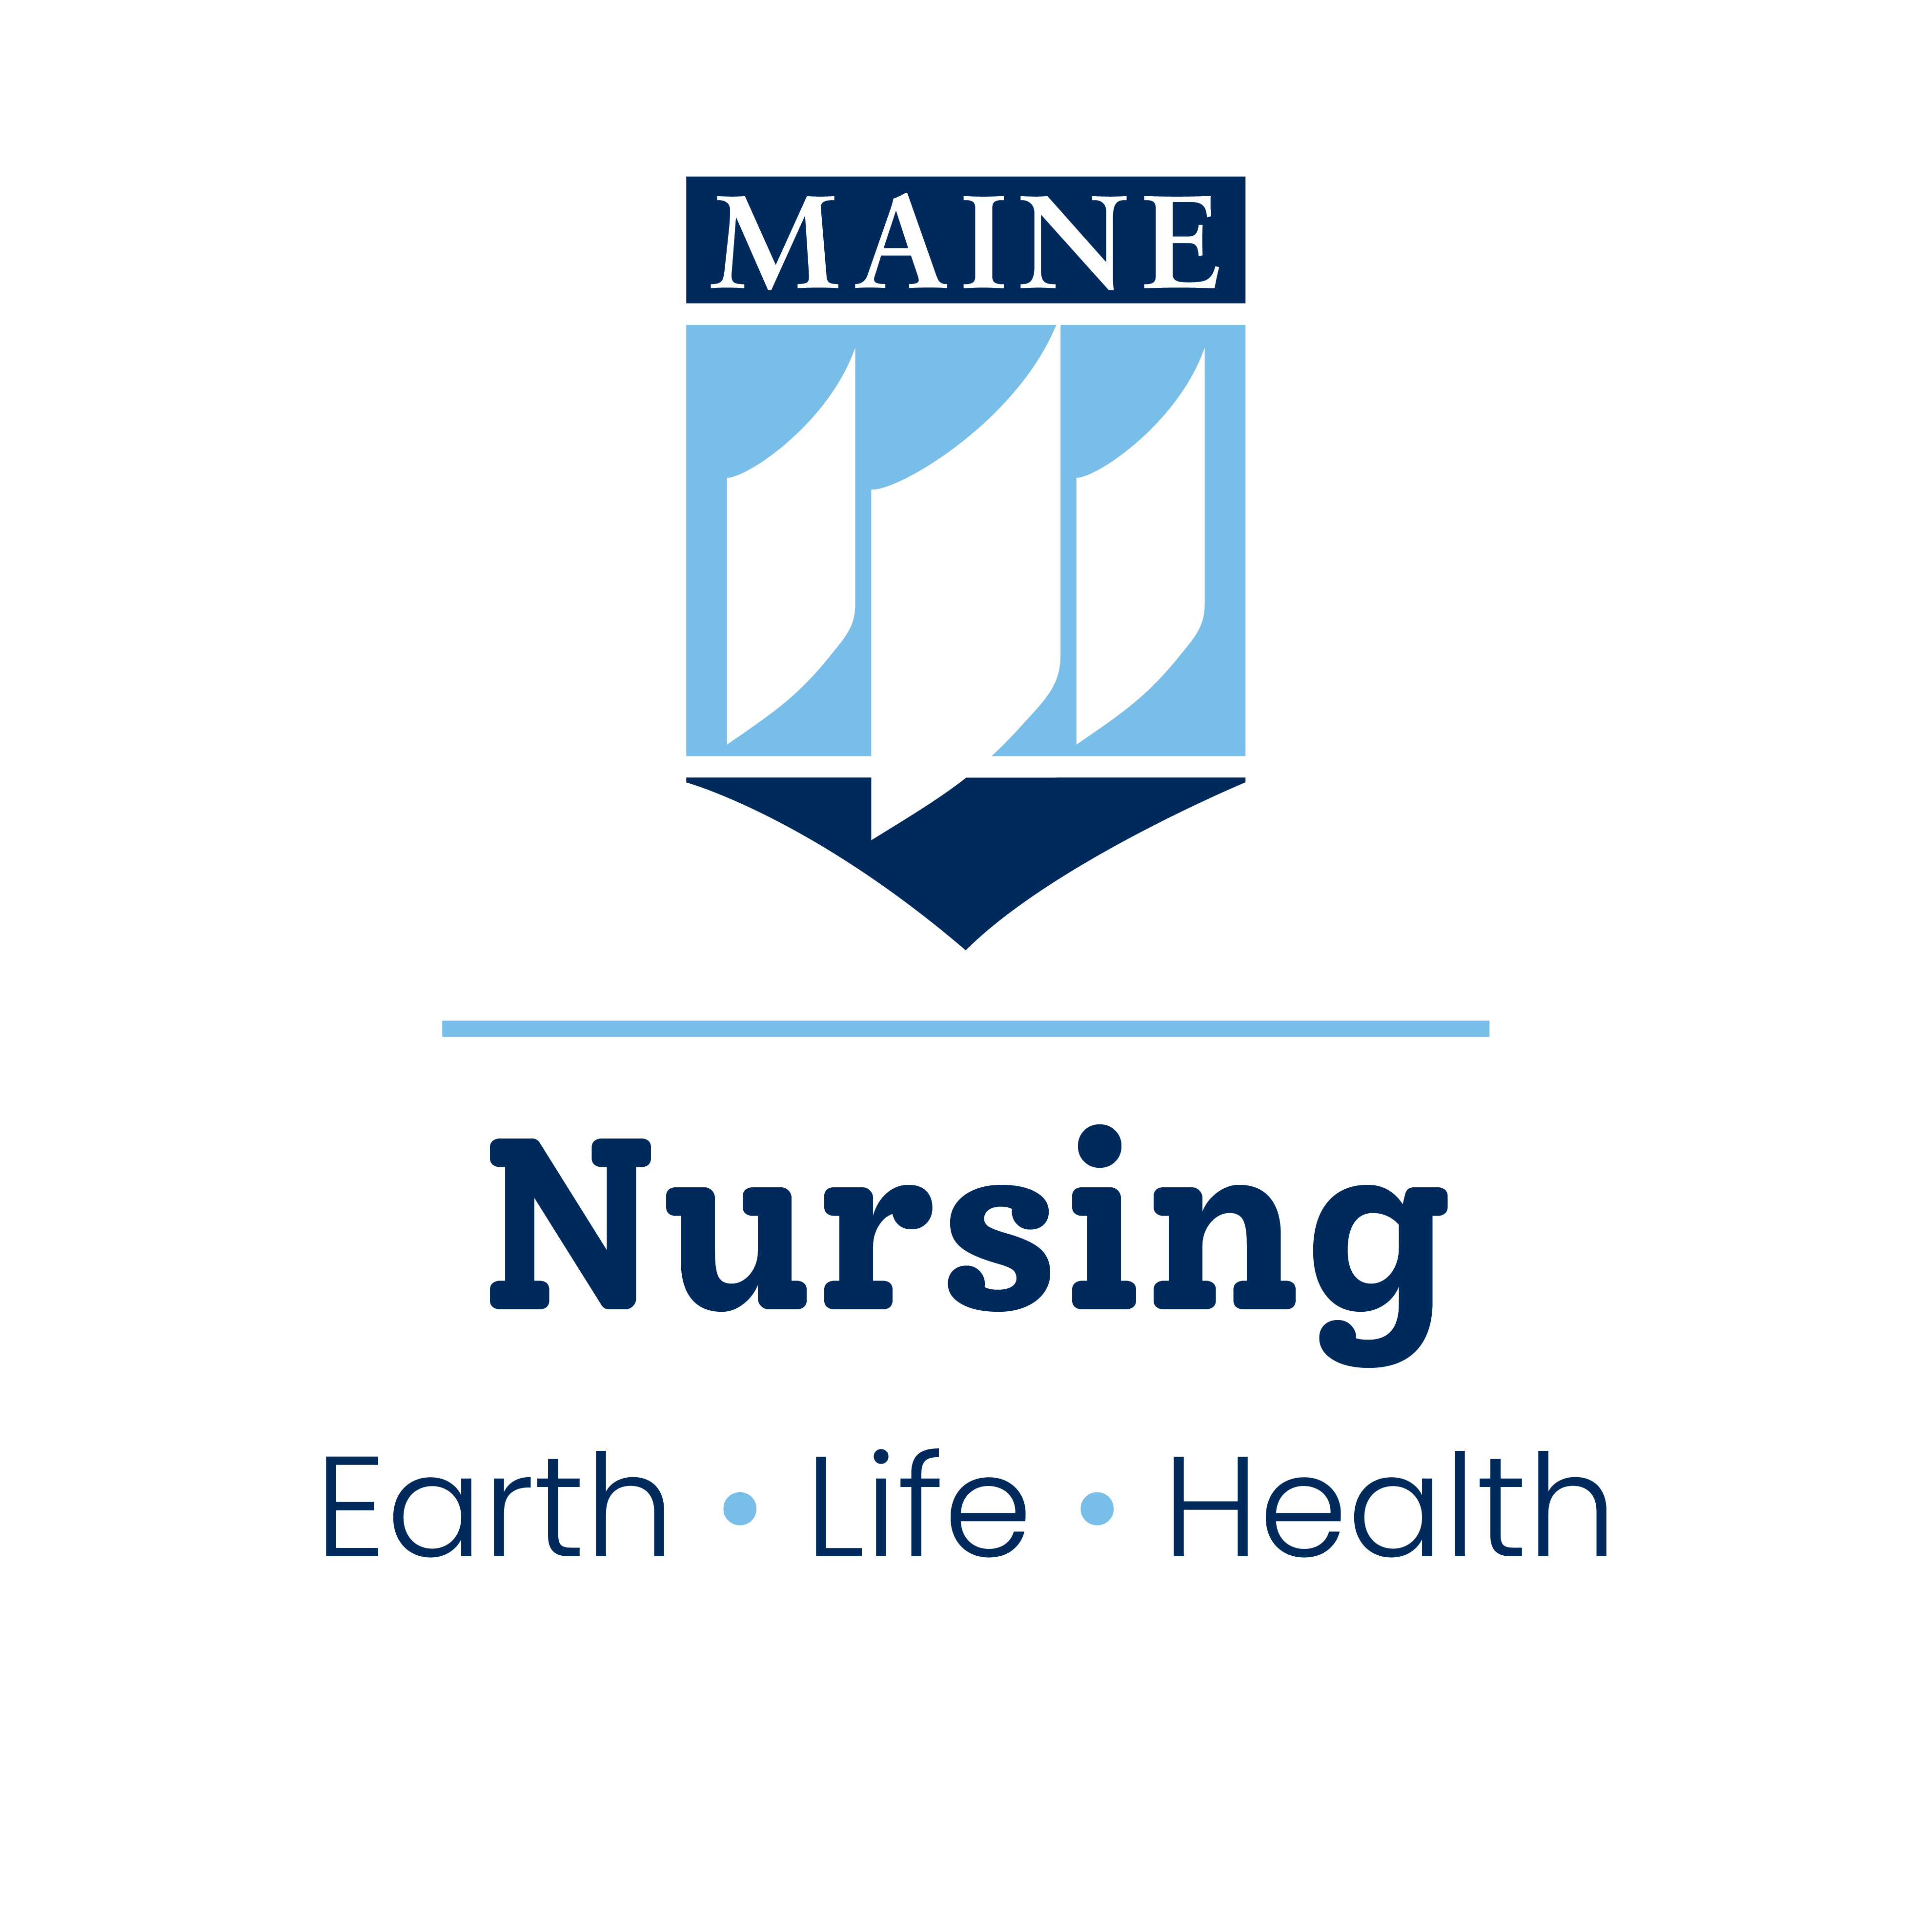 UMaine crest, nursing, earth • life • health